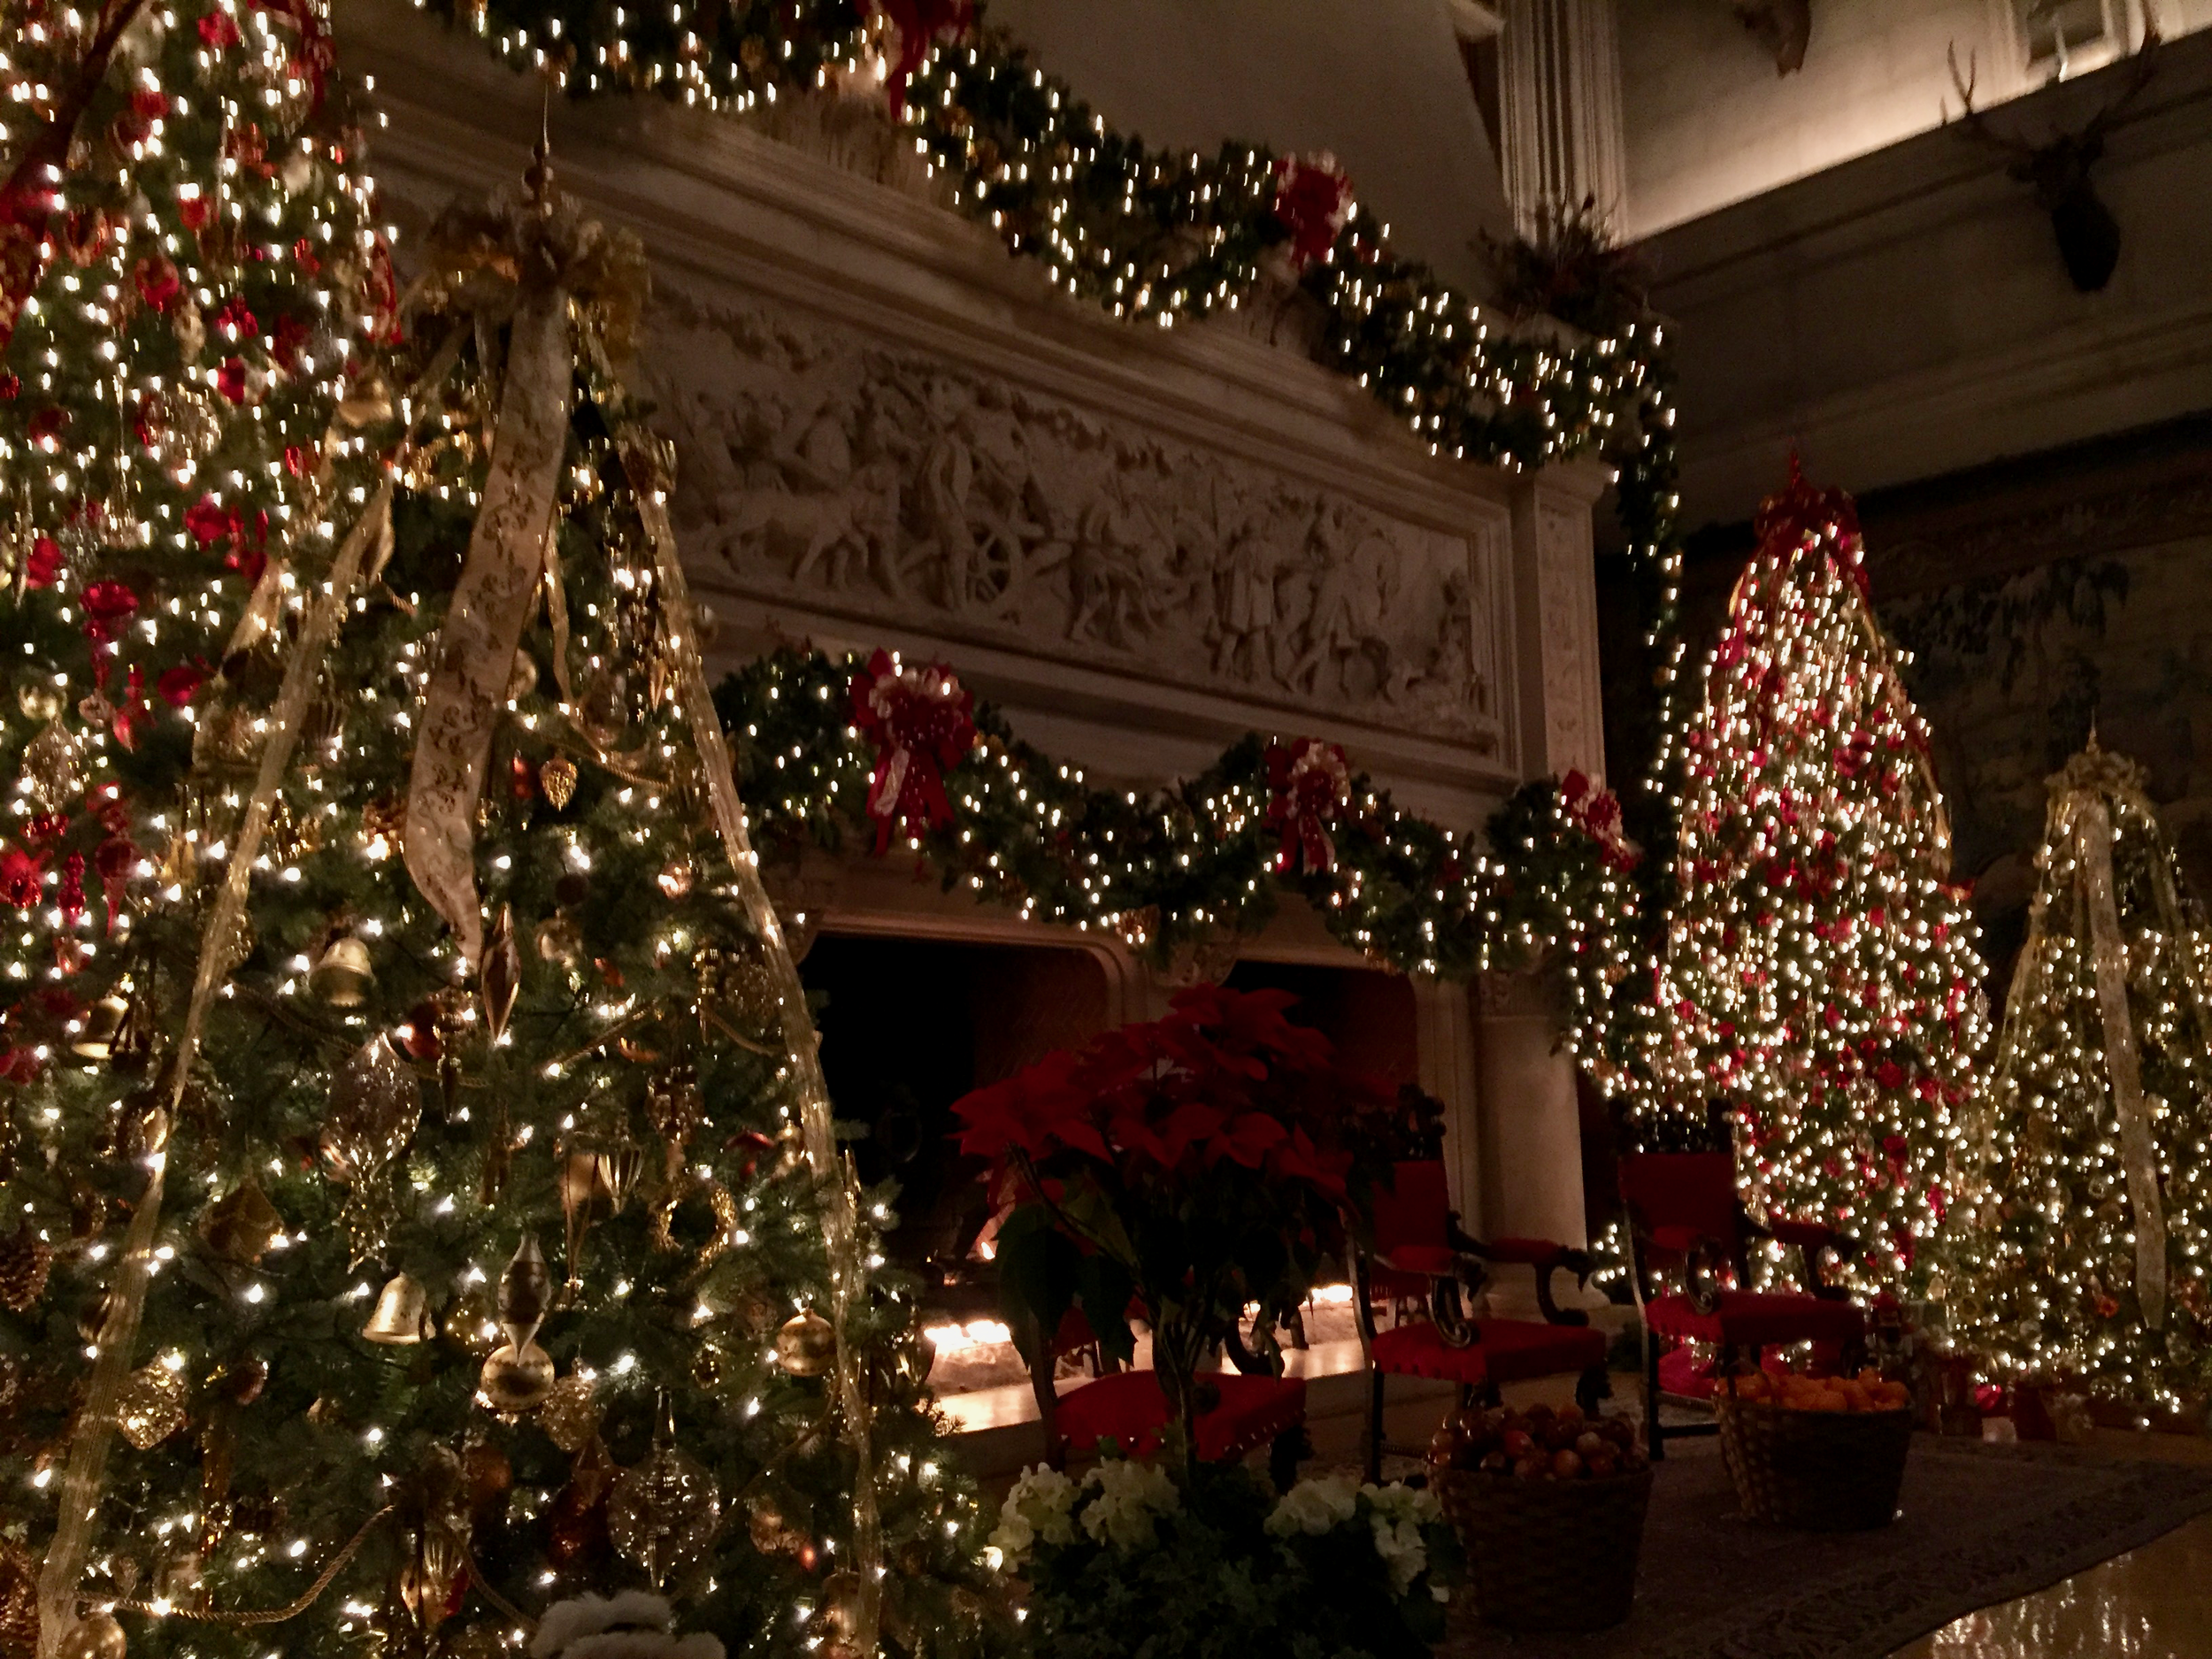 Christmas trees flank a large fireplace.